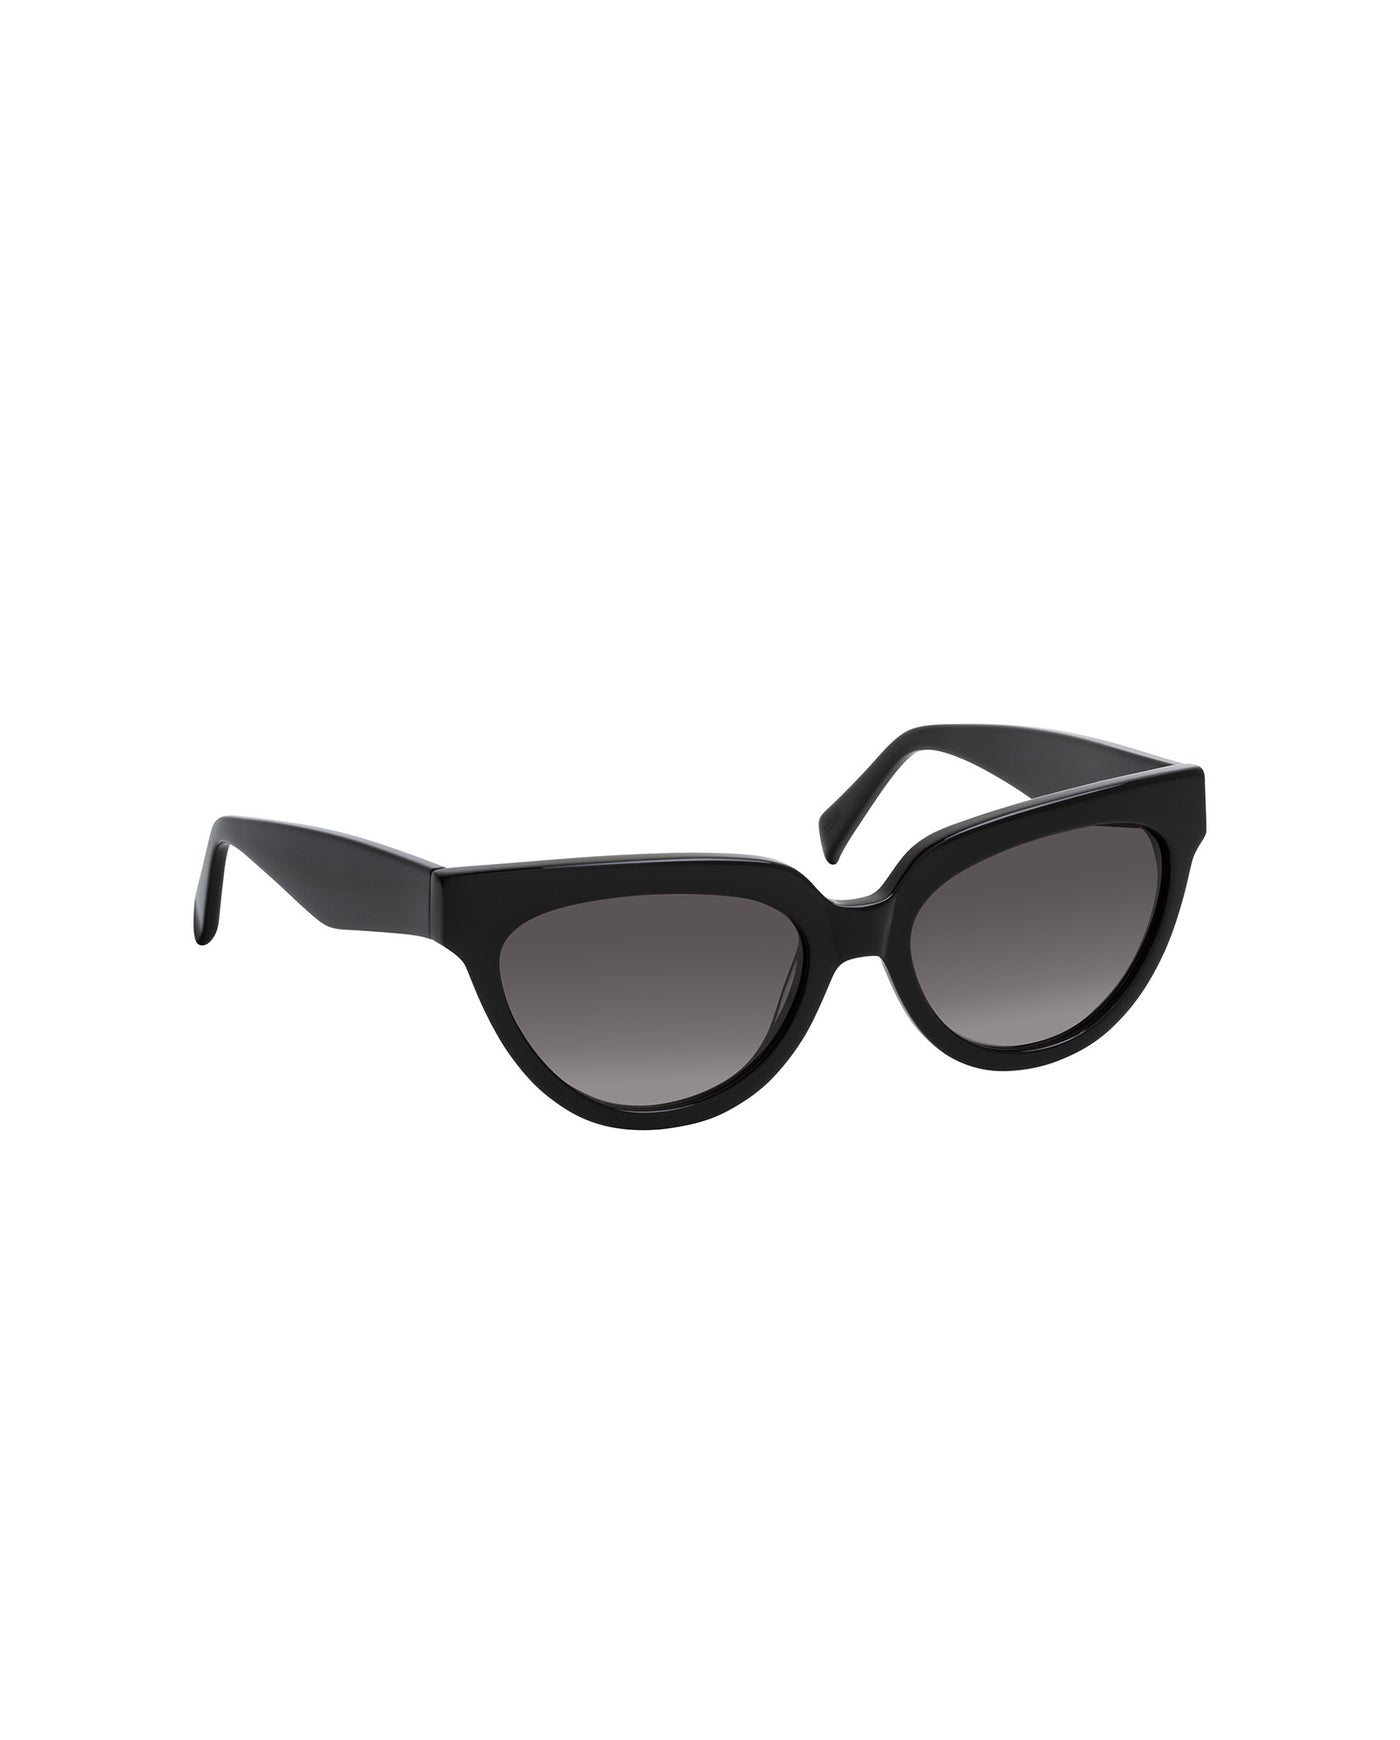 Addison Sunglasses